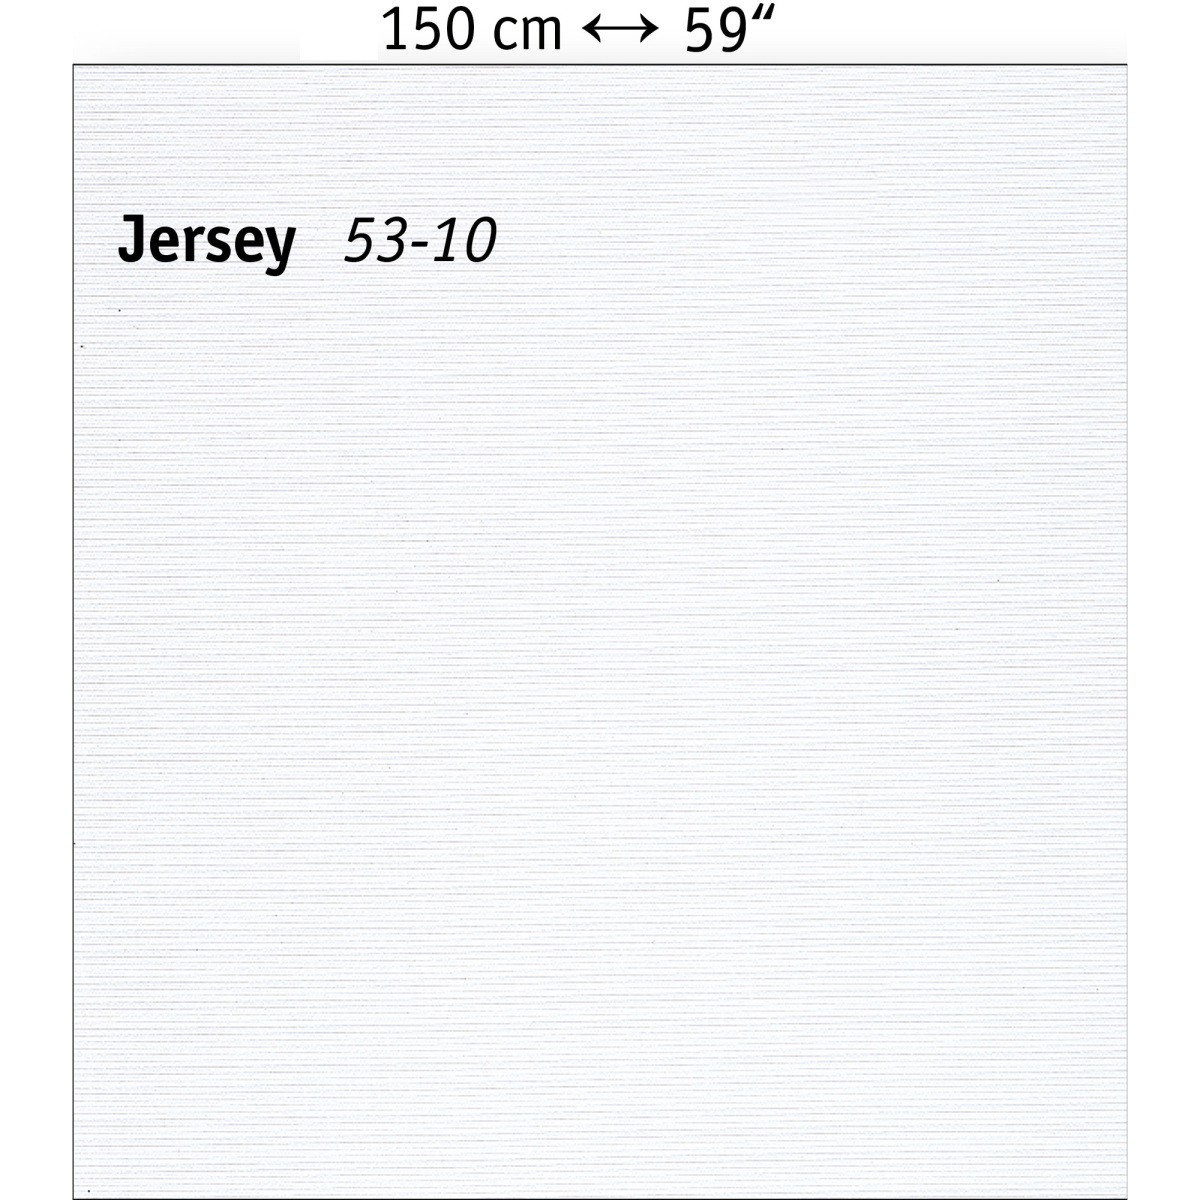 206-Jersey53-10-inch_cm-2000x2000pix-KW10-MR1